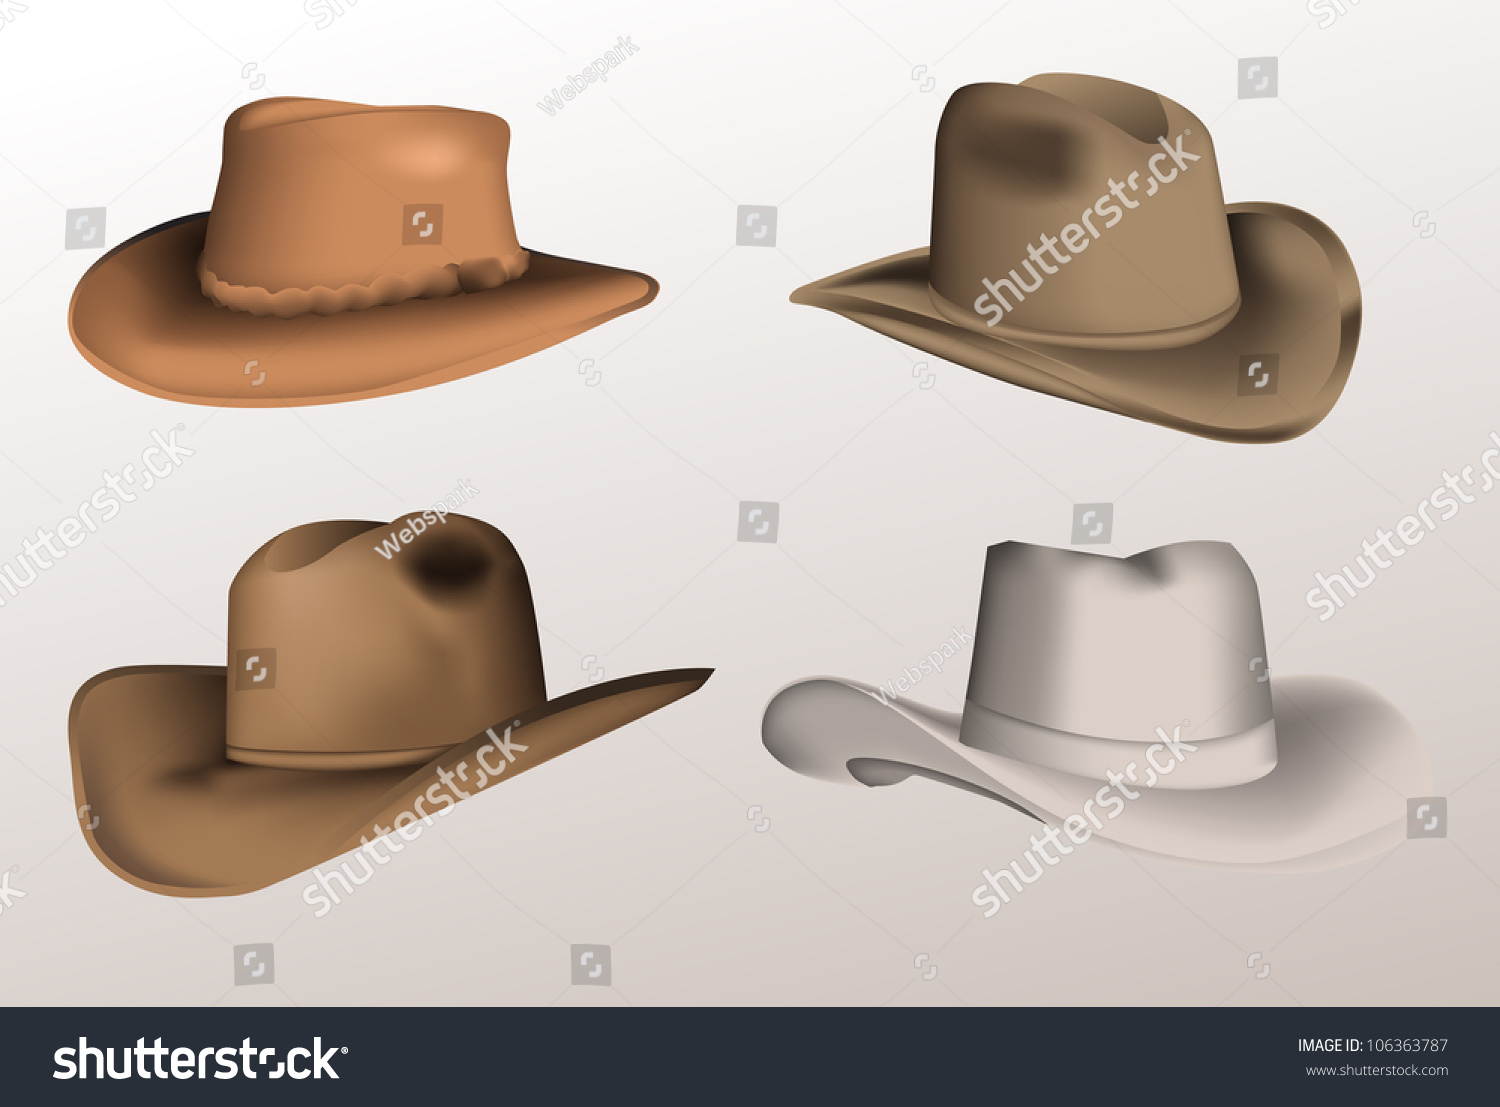 stock trading cowboy hats